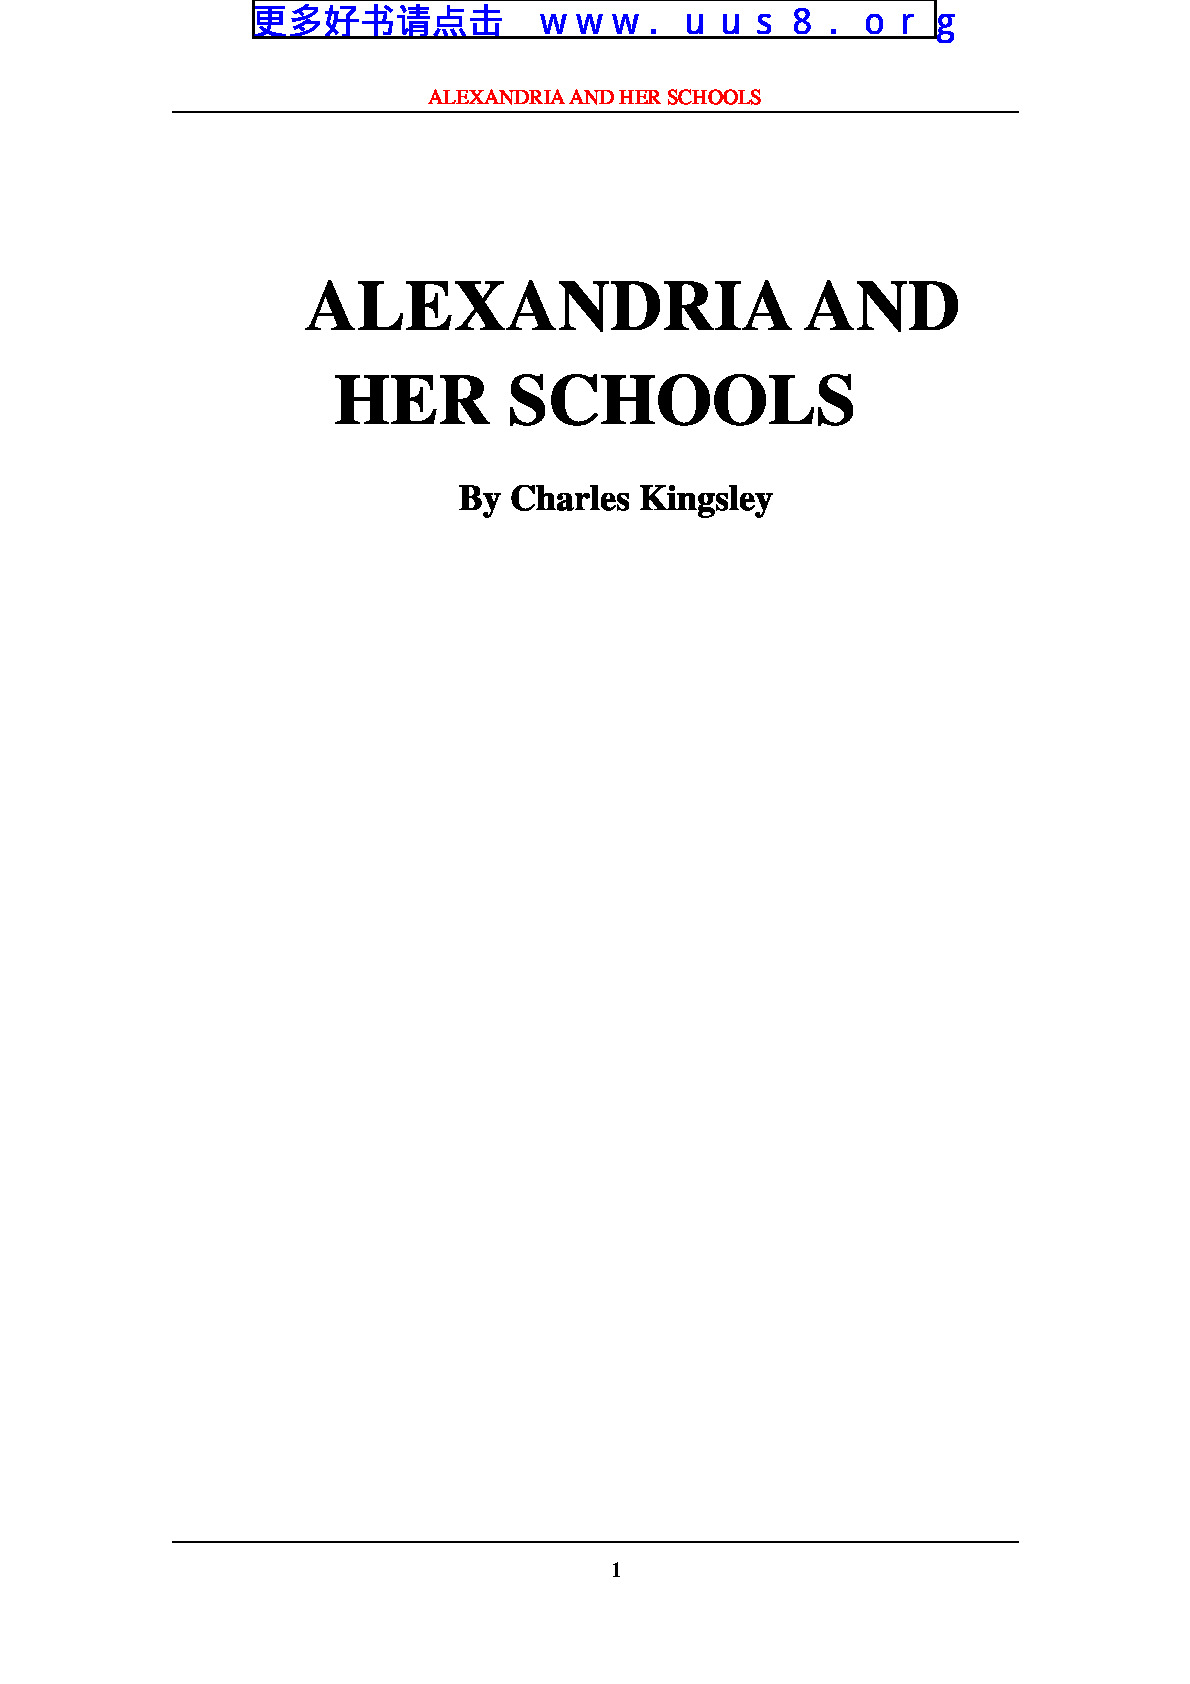 alexandria_and_her_schools(亚历山大和她的学校)